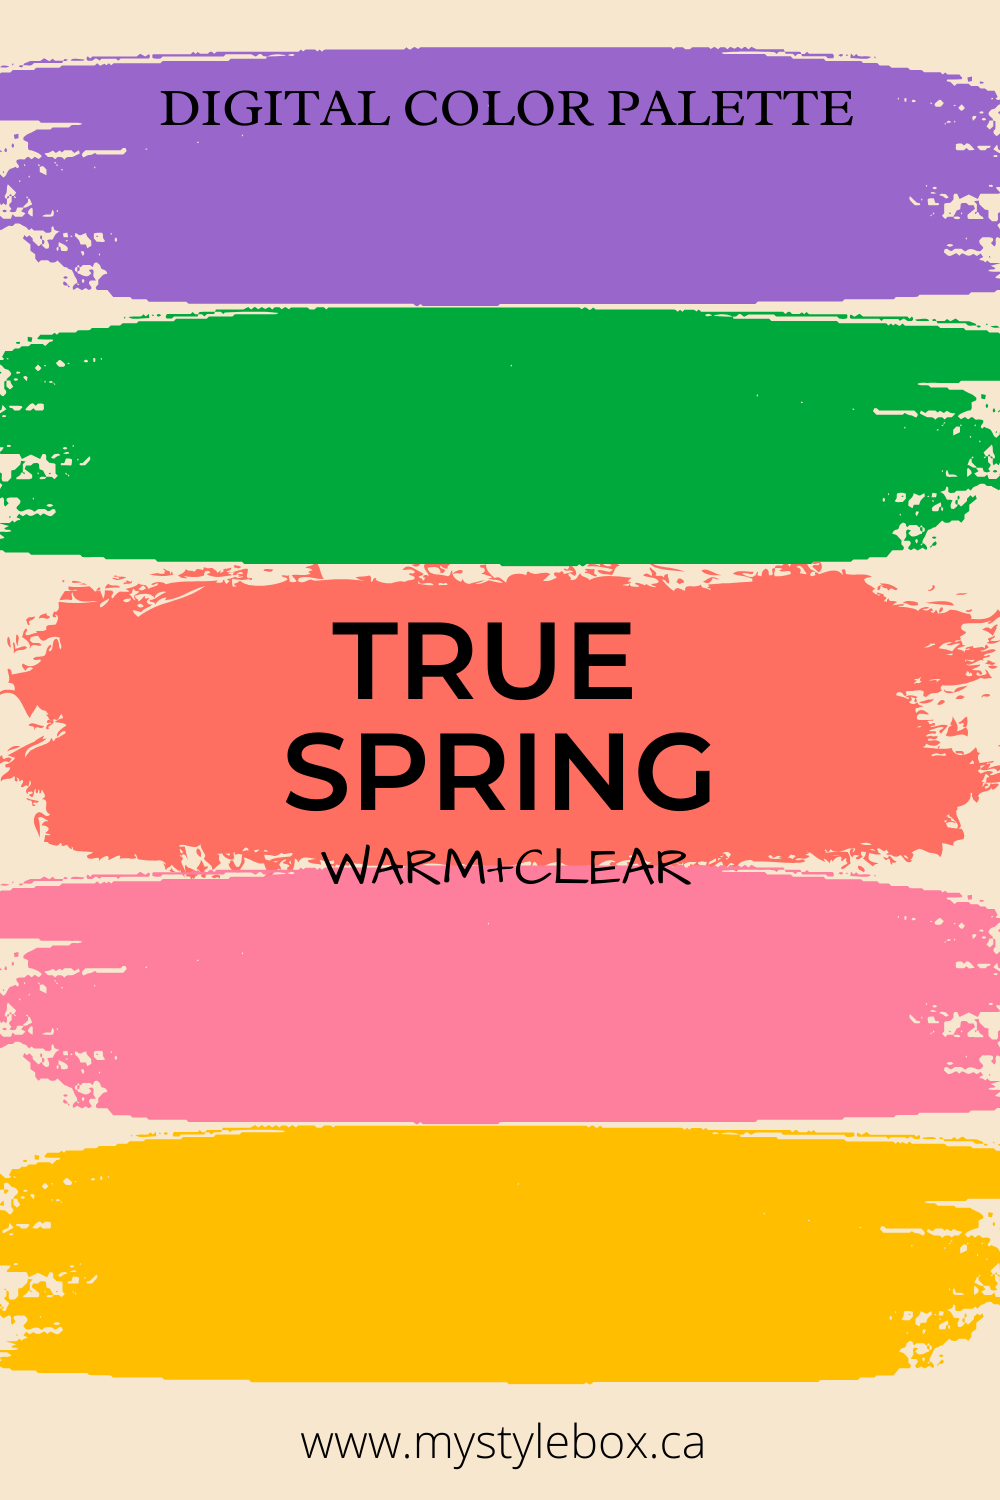 True (Warm) Spring Season Digital Color Palette